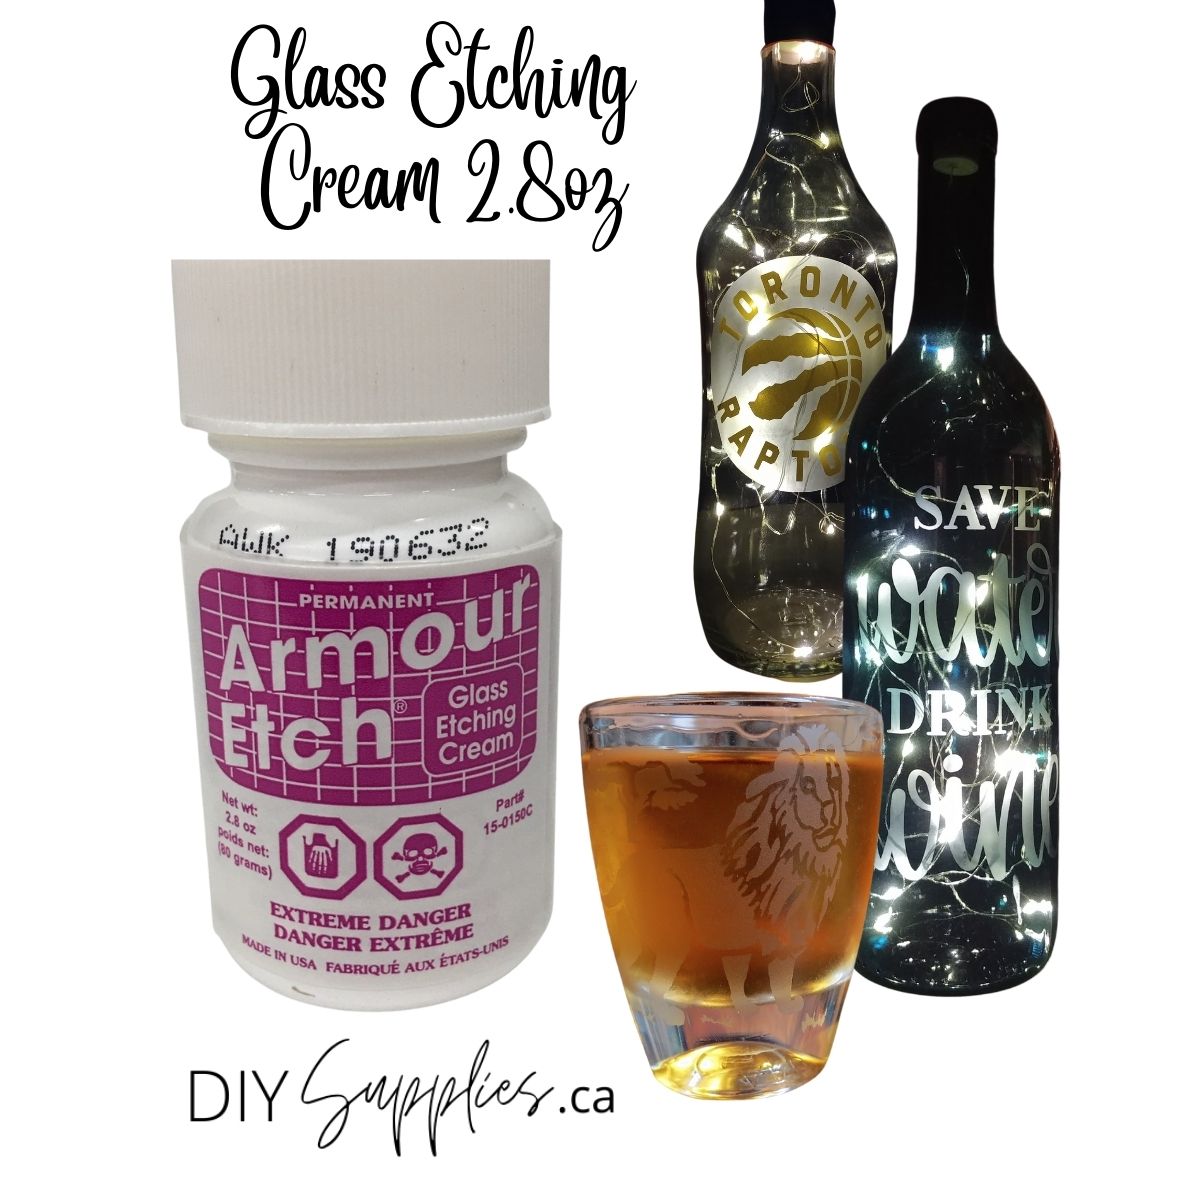 Armour Etch Glass Etching Cream - 22 oz